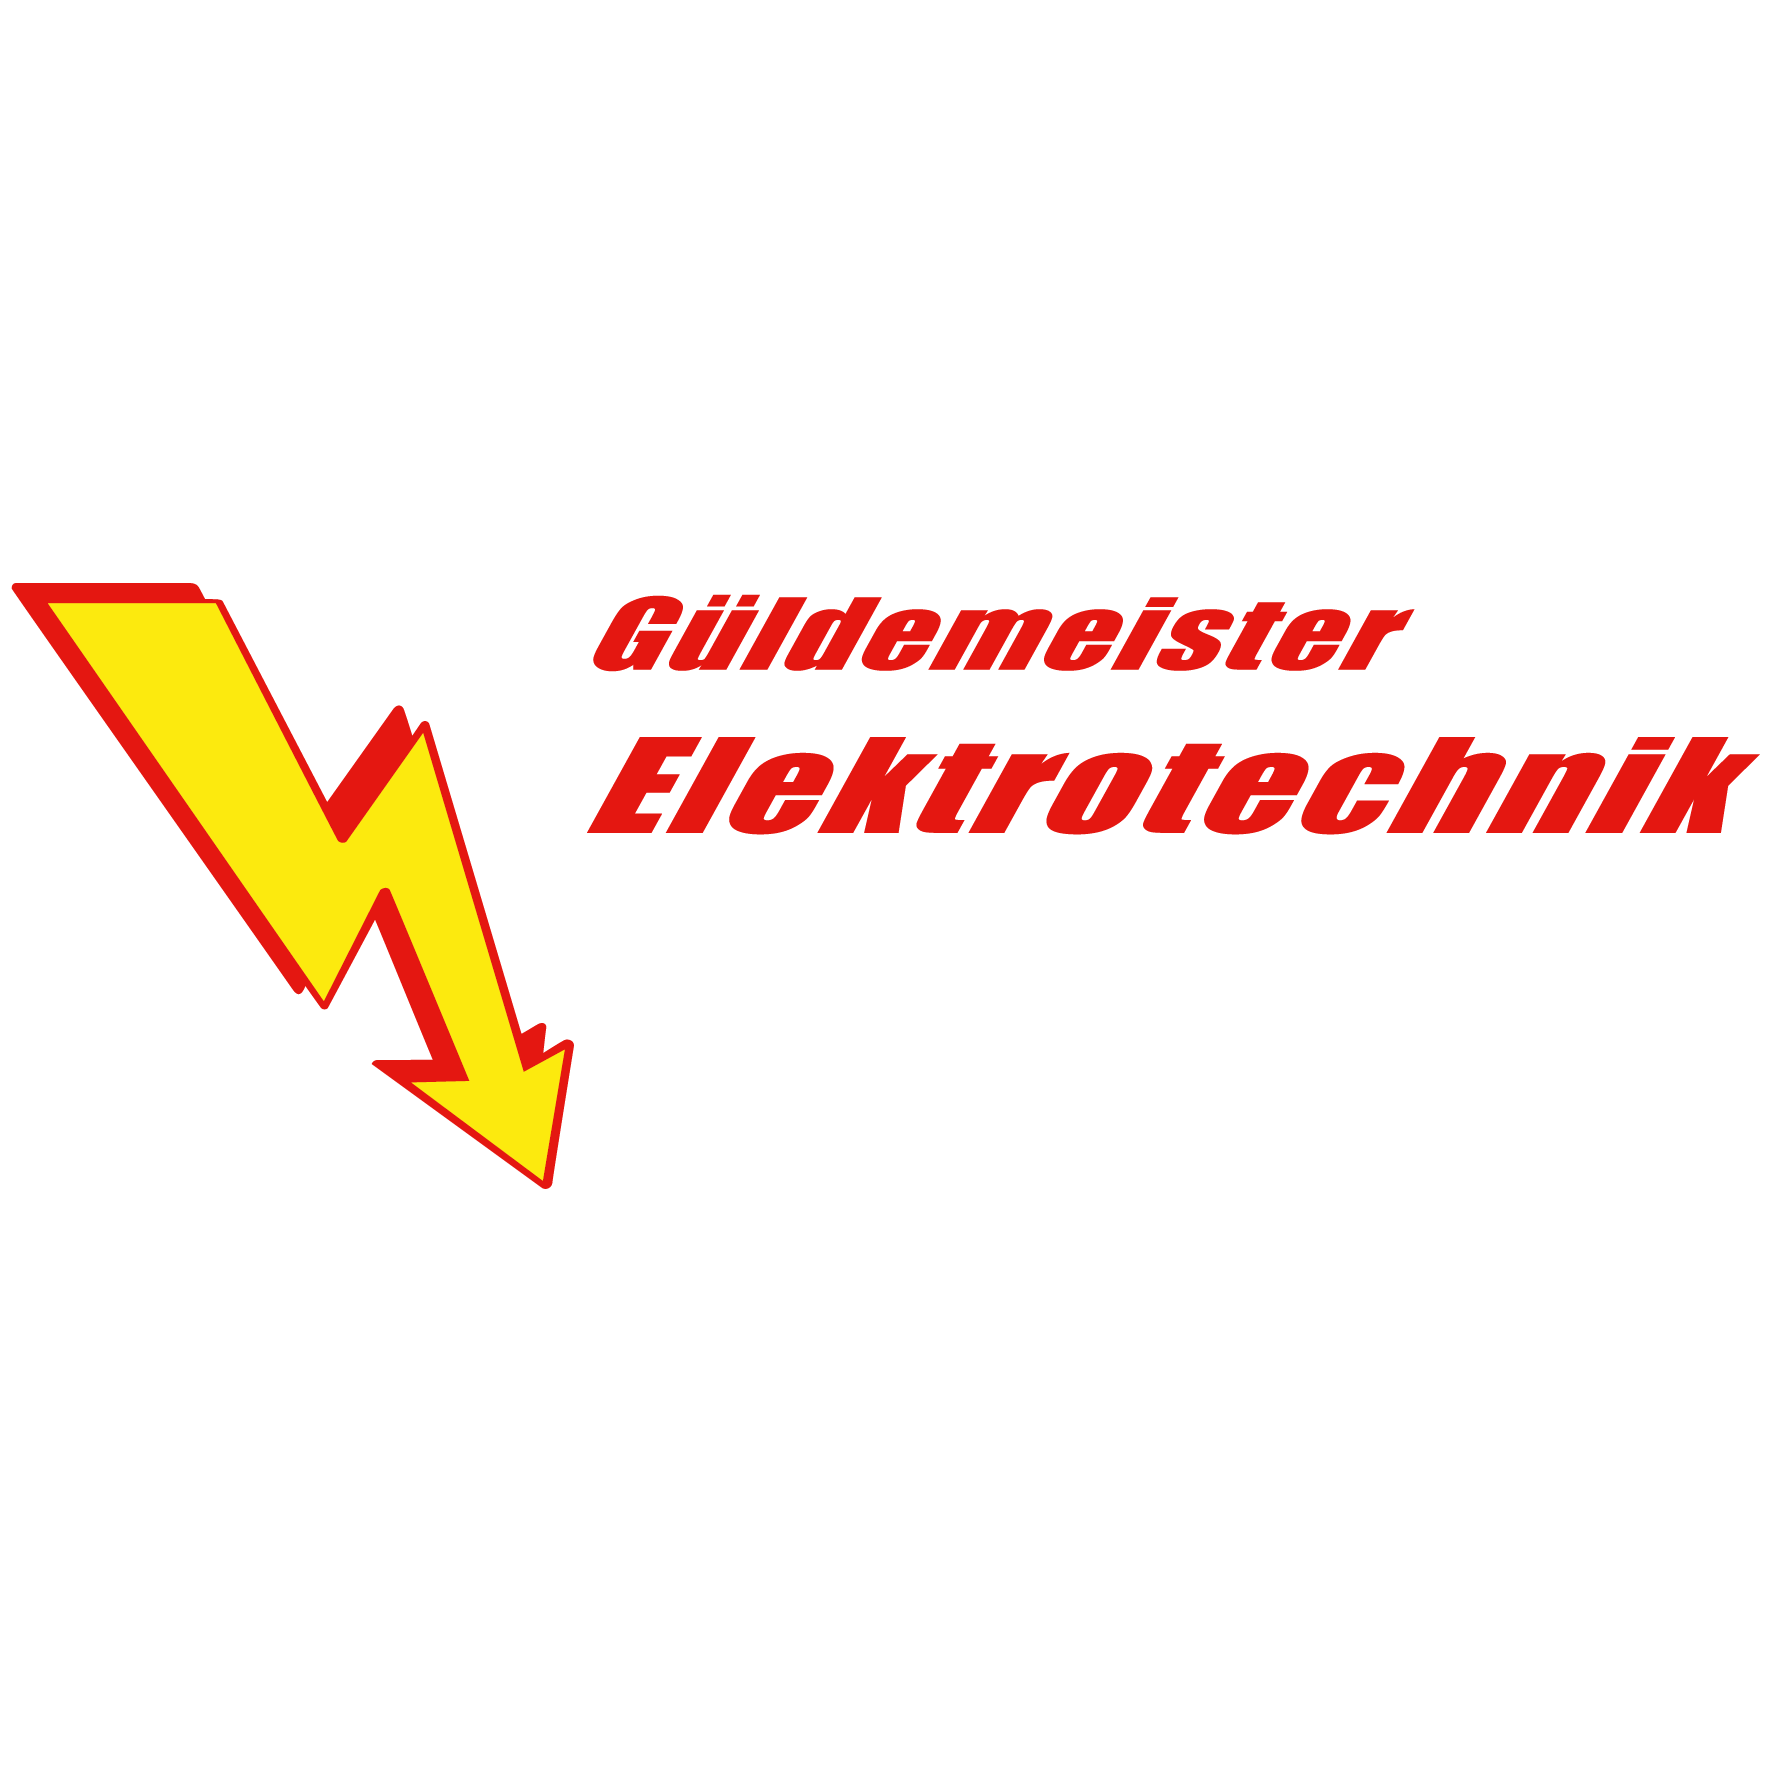 Güldemeister Elektrotechnik in Müden an der Aller - Logo